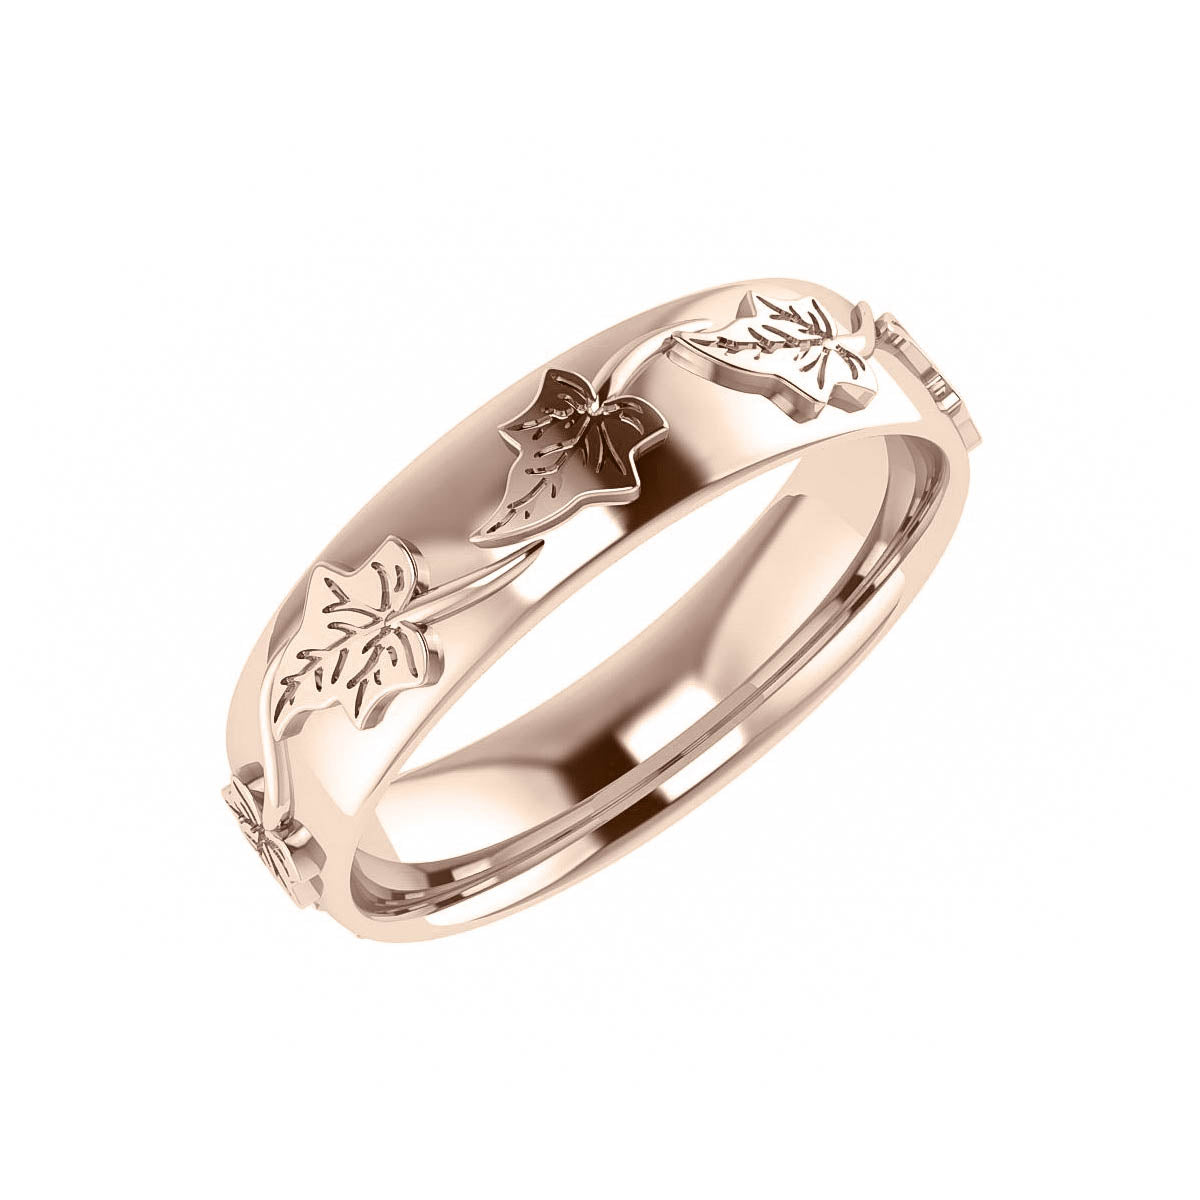 Ivy leaves pattern wedding band, comfort fit 6 mm, unisex wedding band - Eden Garden Jewelry™